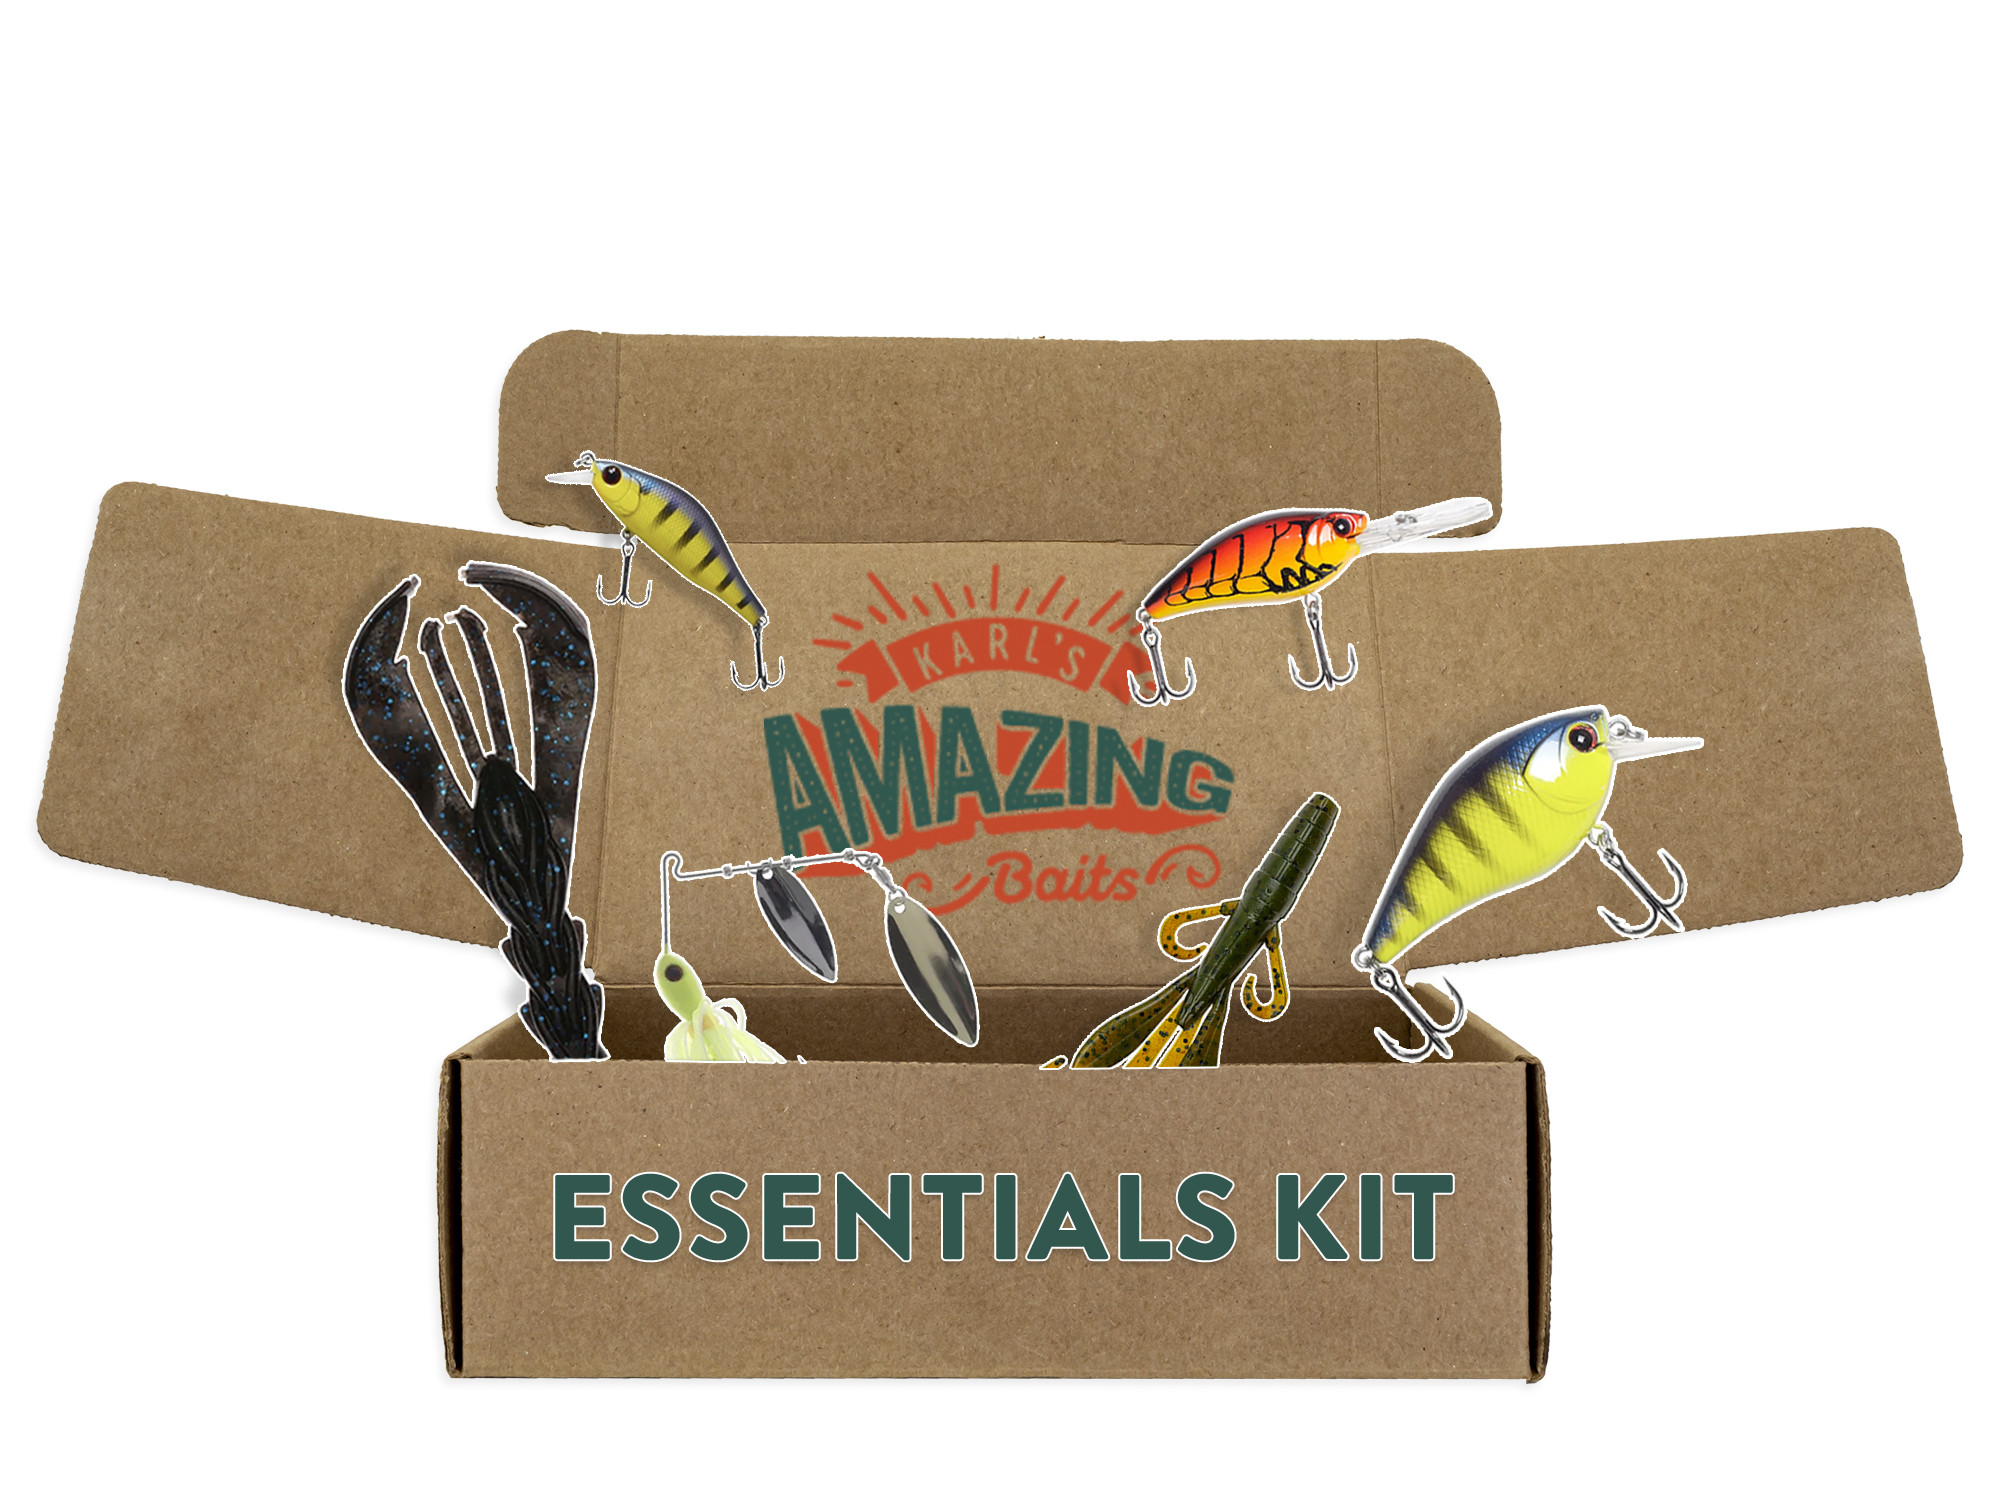 Karl's Amazing Baits Essentials Kit